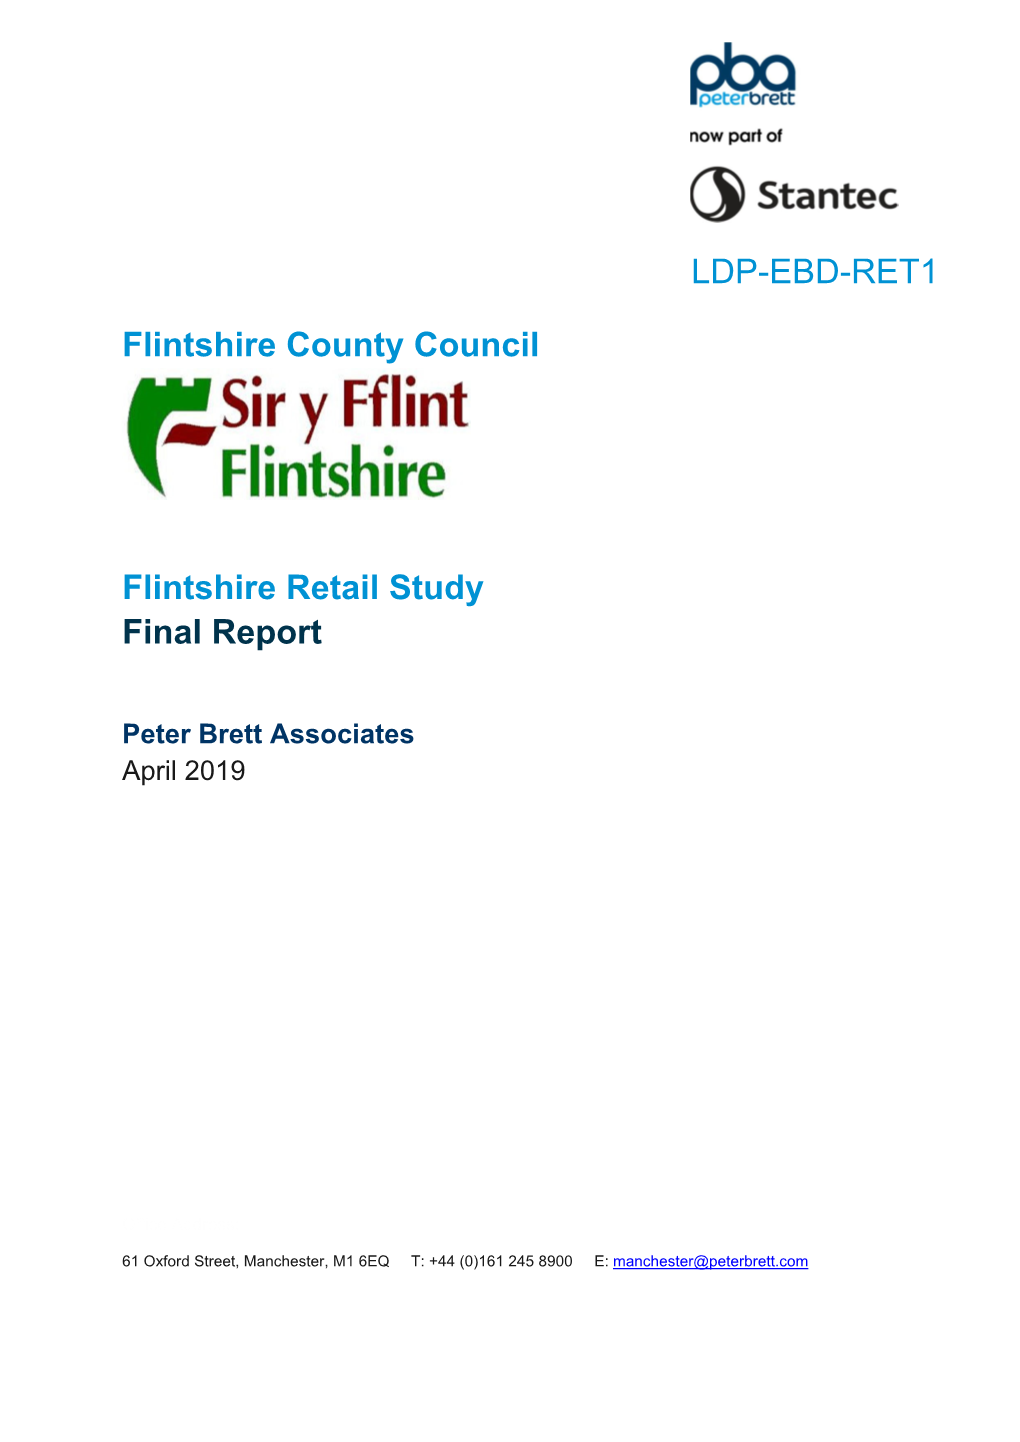 LDP-EBD-RET1 Flintshire Retail Study – Final Report – April 2019